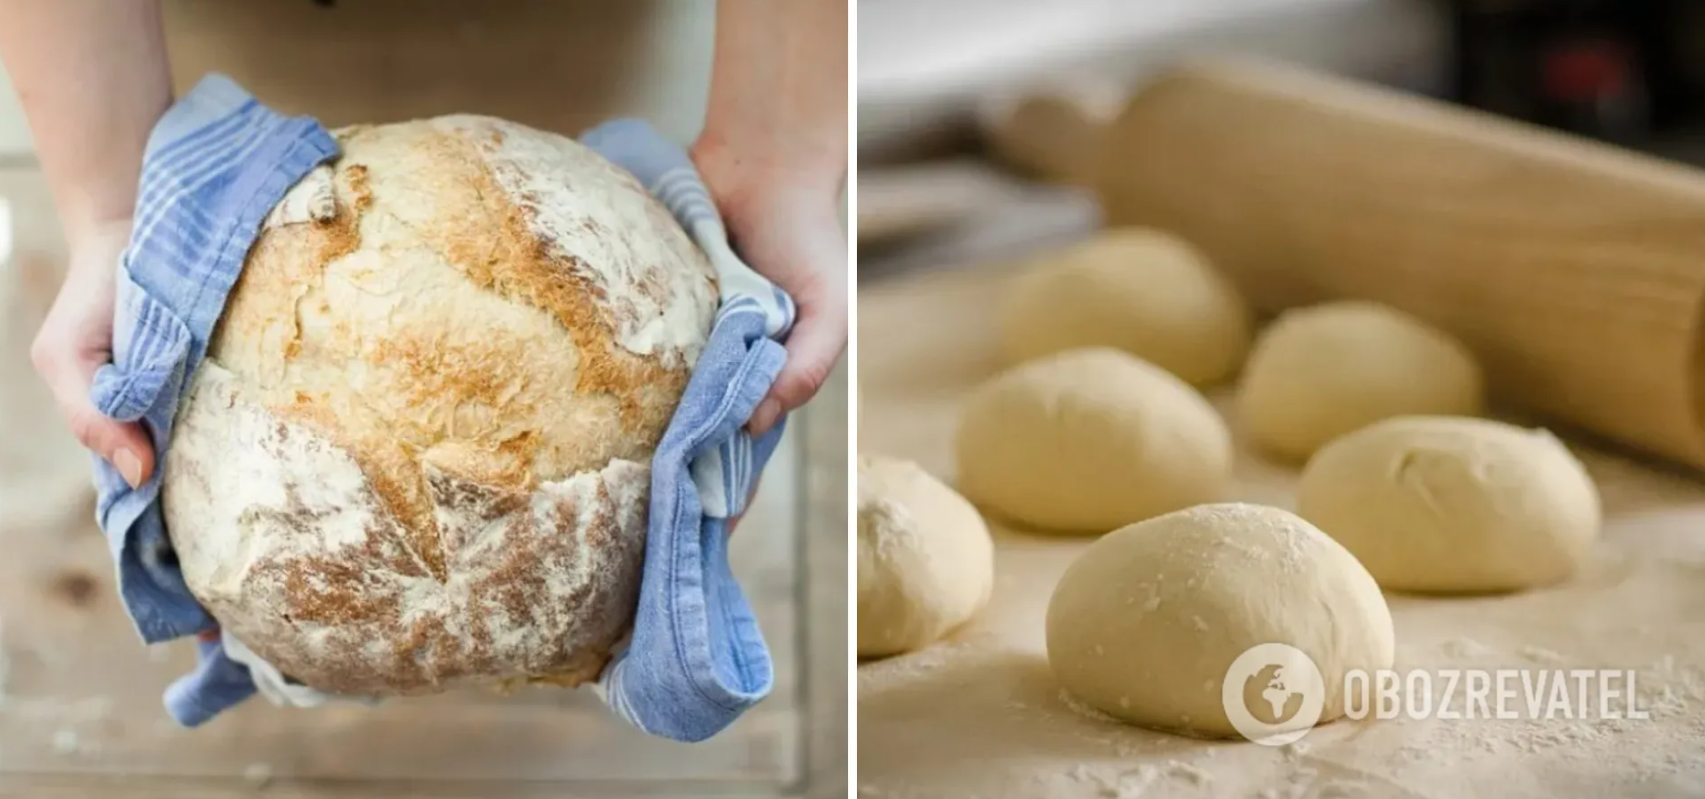 Yeast bread dough